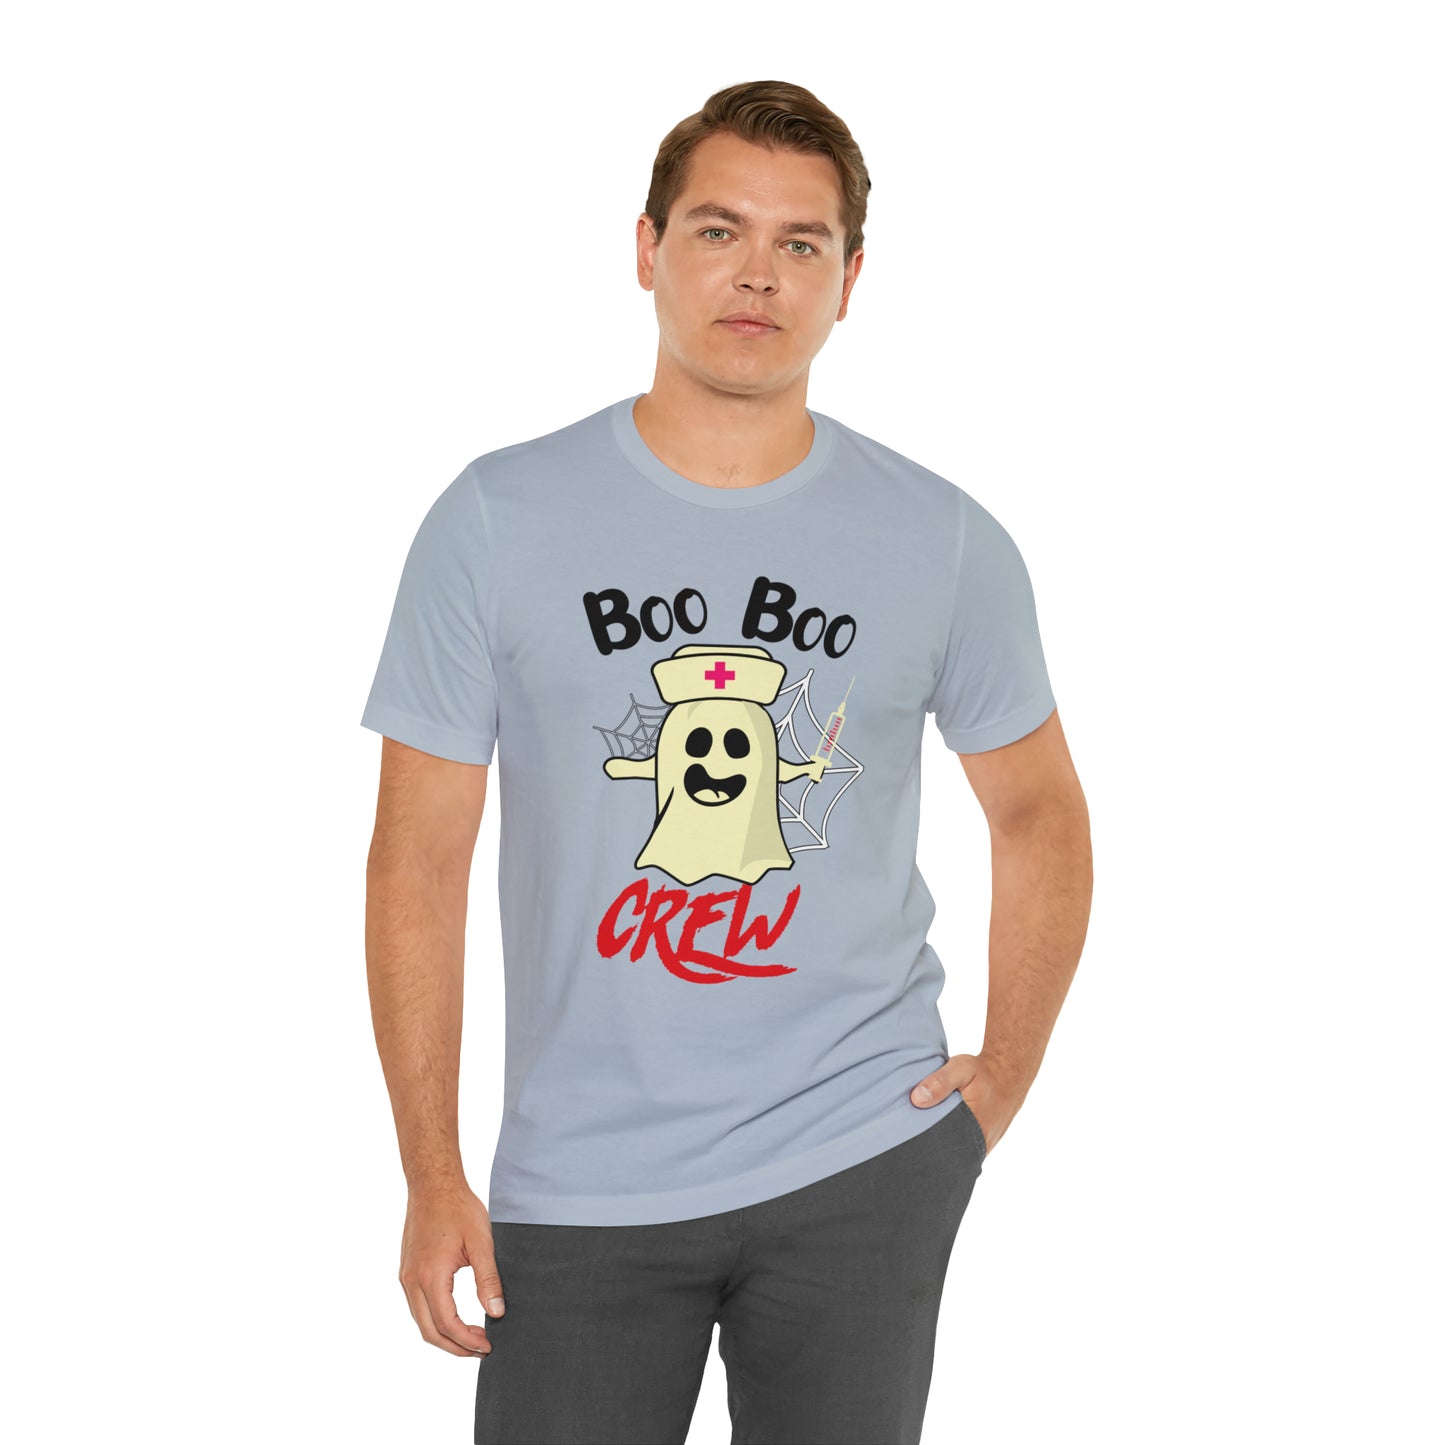 Boo Boo Crew Shirt, Cute Halloween Gift, Ghost Lover Shirt, Ghost Halloween Shirt, Spooky Shirt, Halloween Shirt, T758